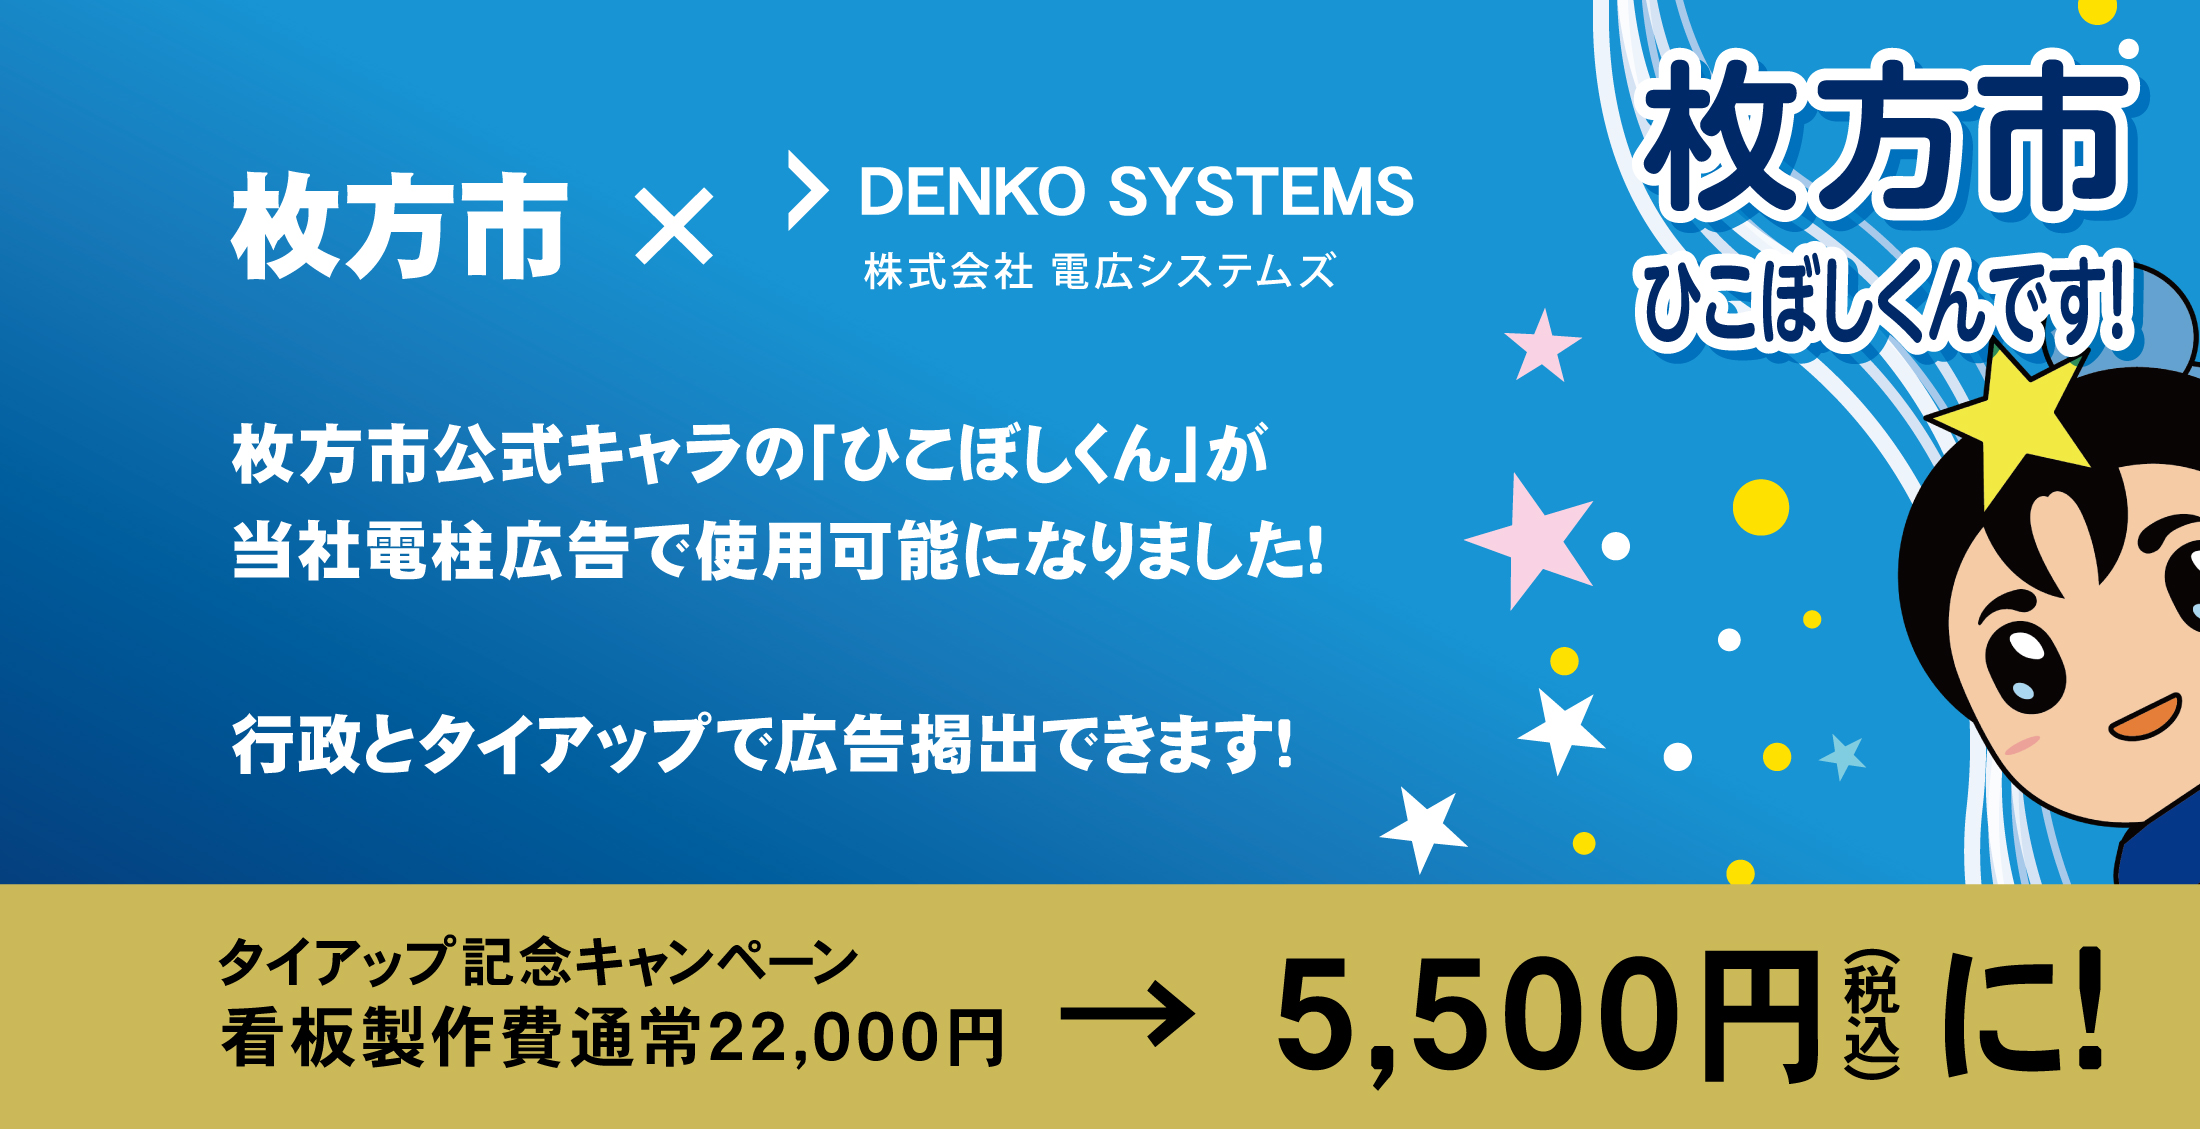 DENKO SYSTEMS | 電広システムズ | 電柱広告 | キャンペーン